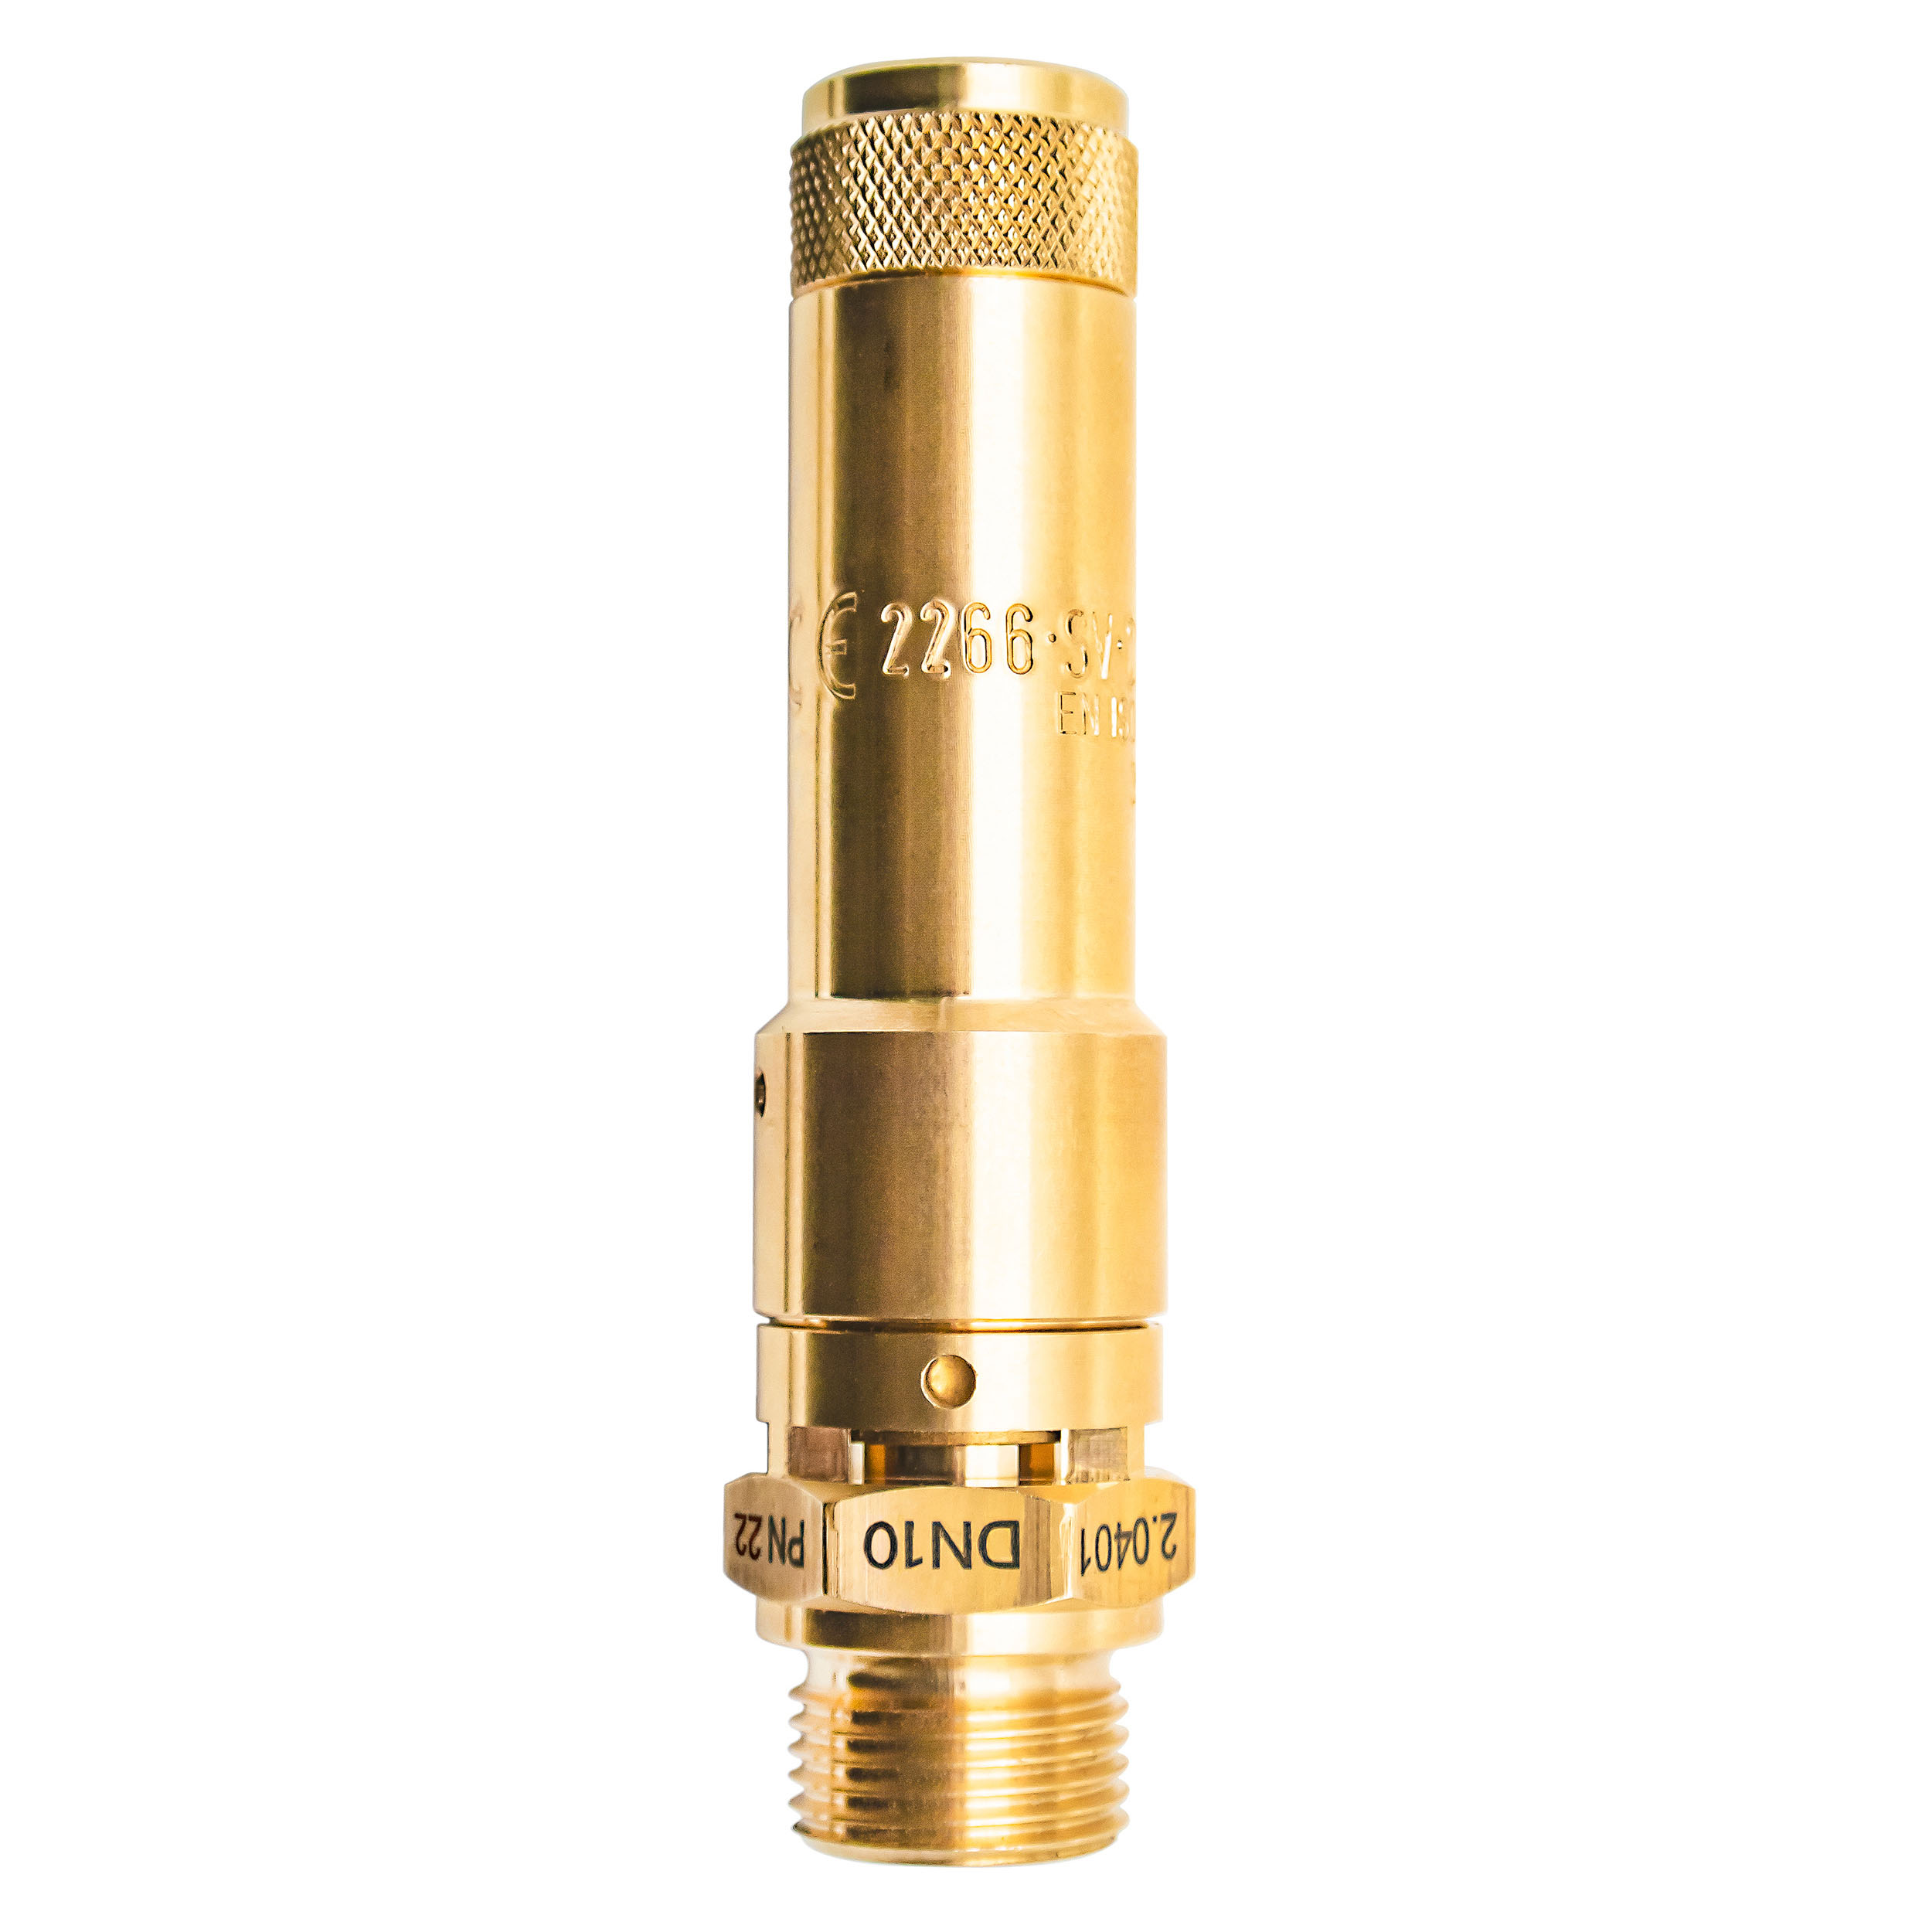 Savety valve component tested DN 10, G¾, set pressure: 11.3 bar (163,85 psi)